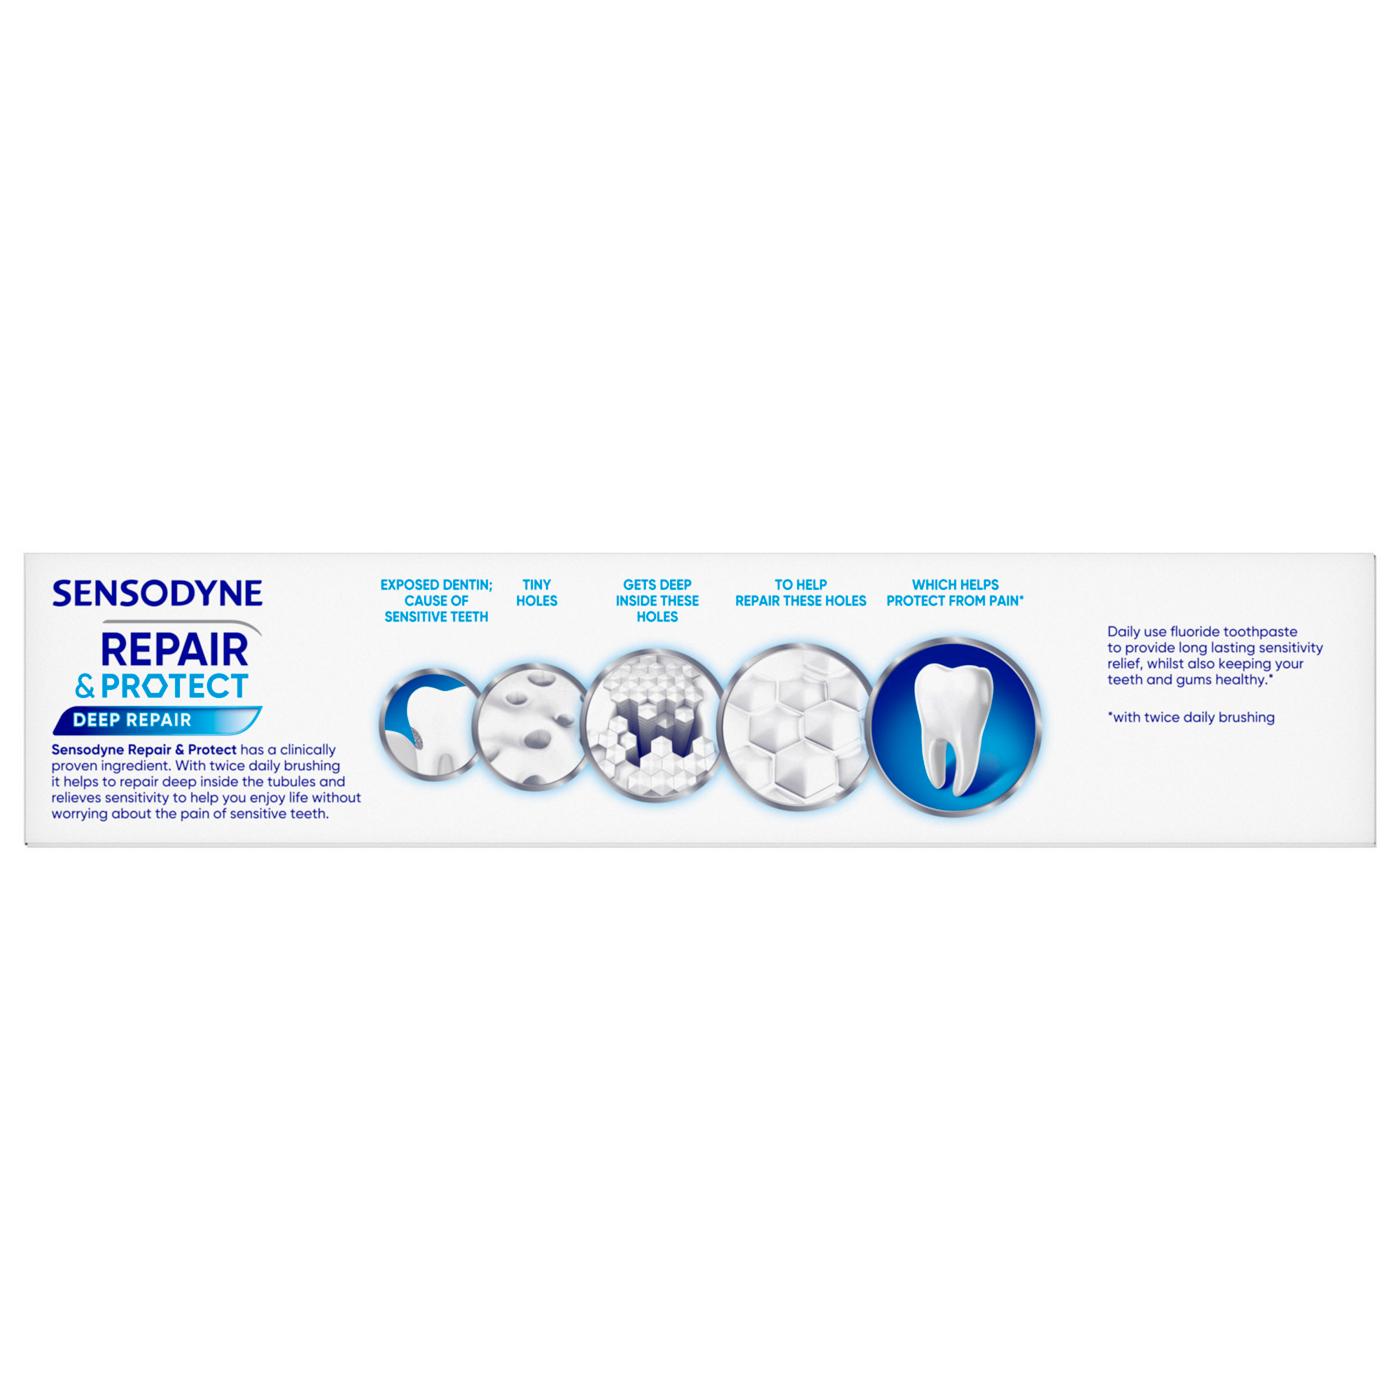 Sensodyne Repair and Protect Teeth Whitening Sensitive Toothpaste; image 6 of 8